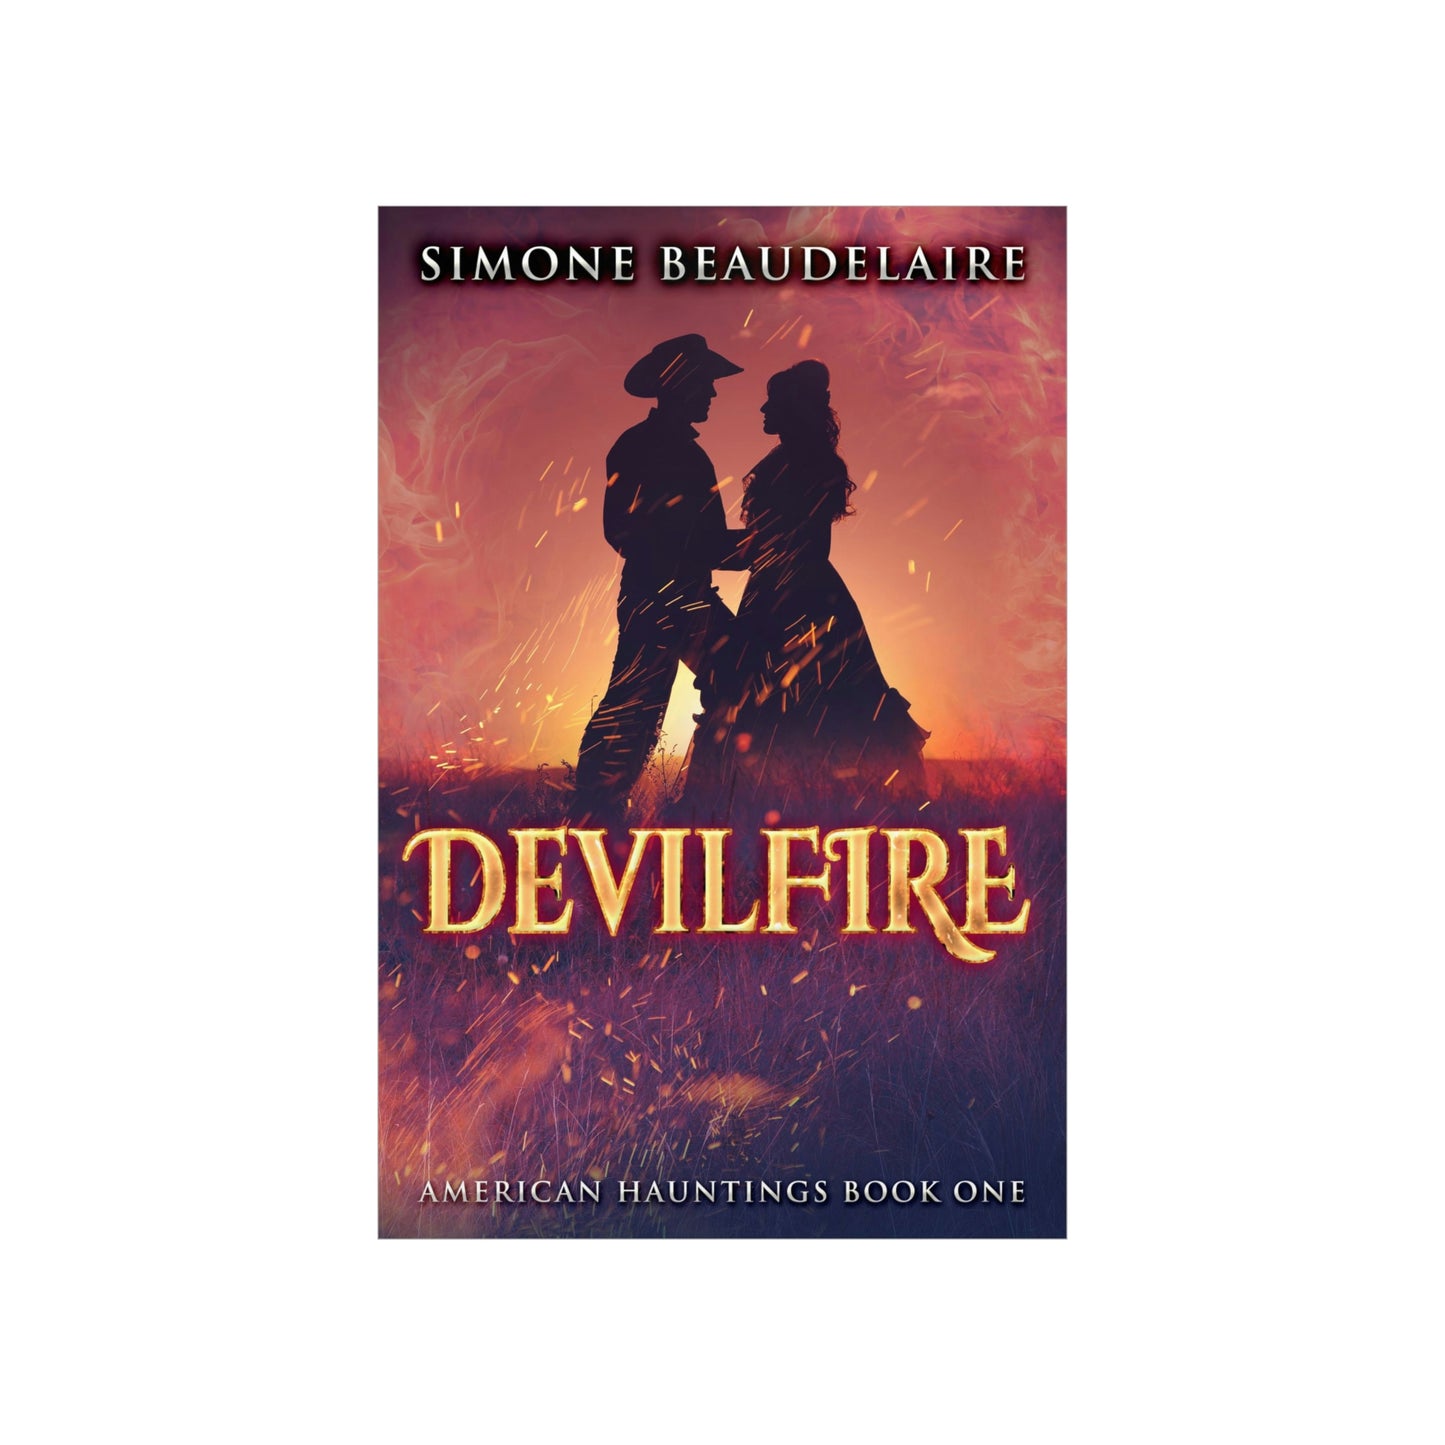 Devilfire - Matte Poster